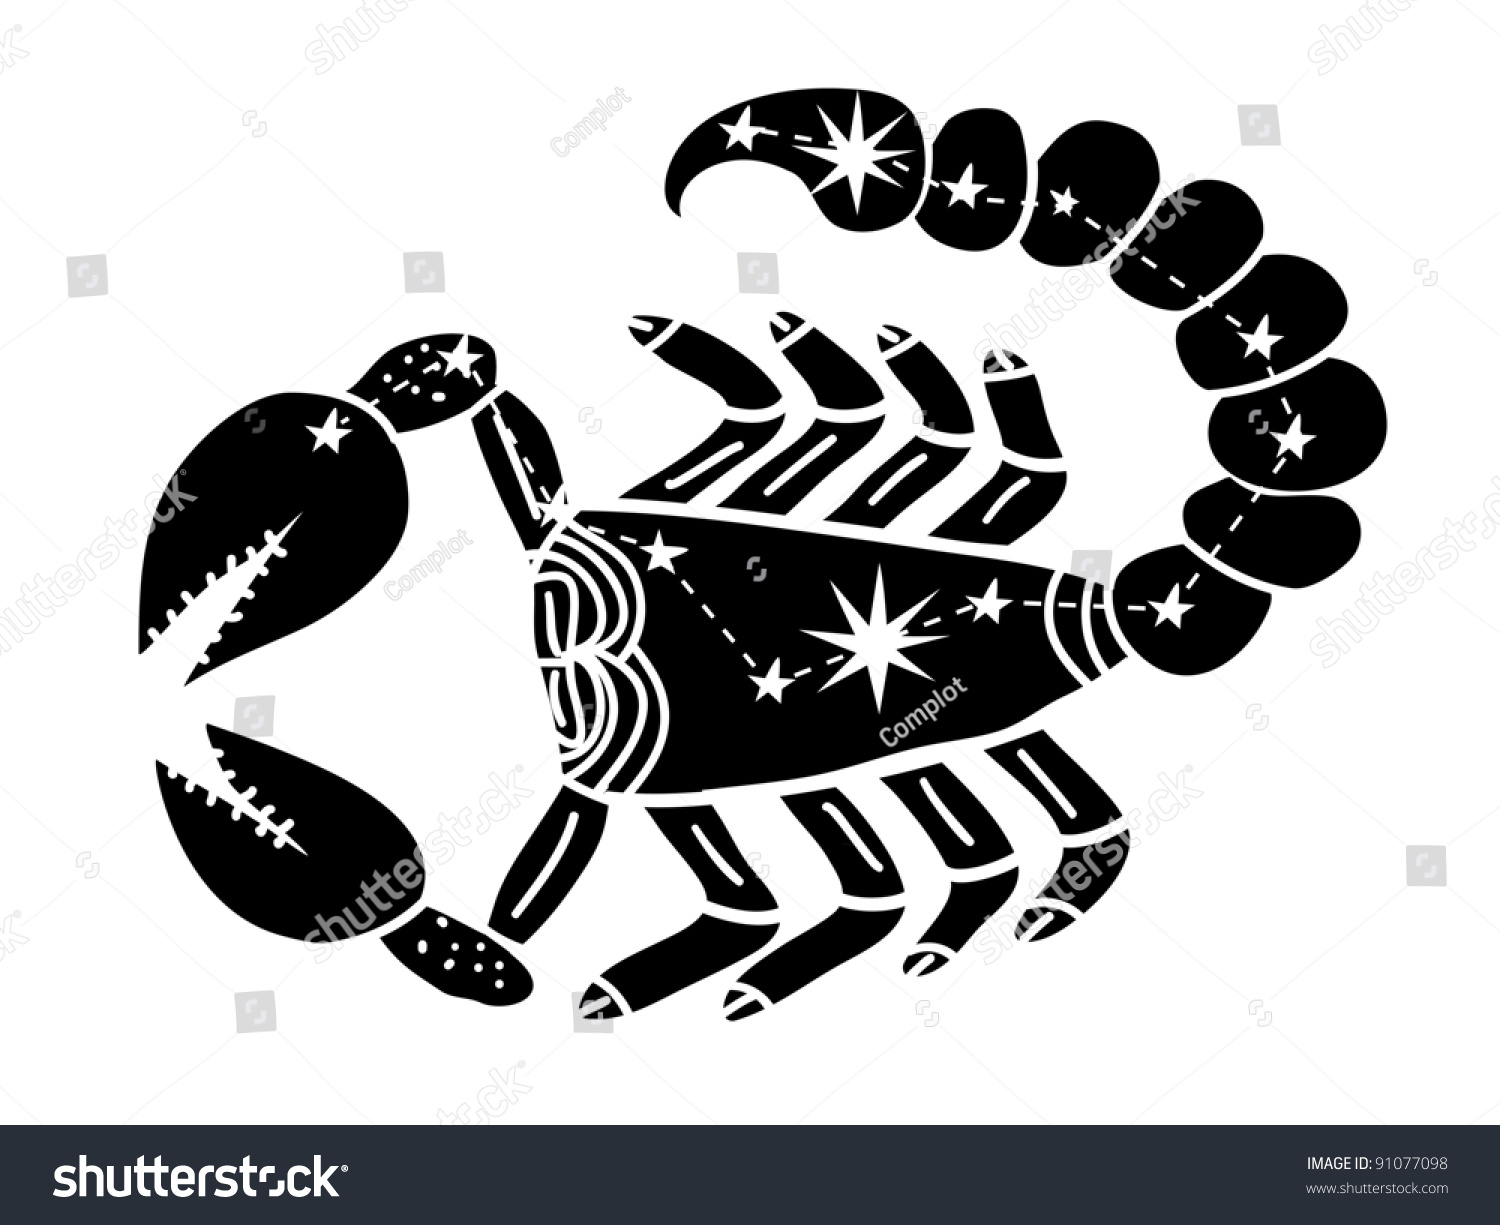 Scorpio Constellation Zodiac Black Stock Vector Illustration 91077098 ...